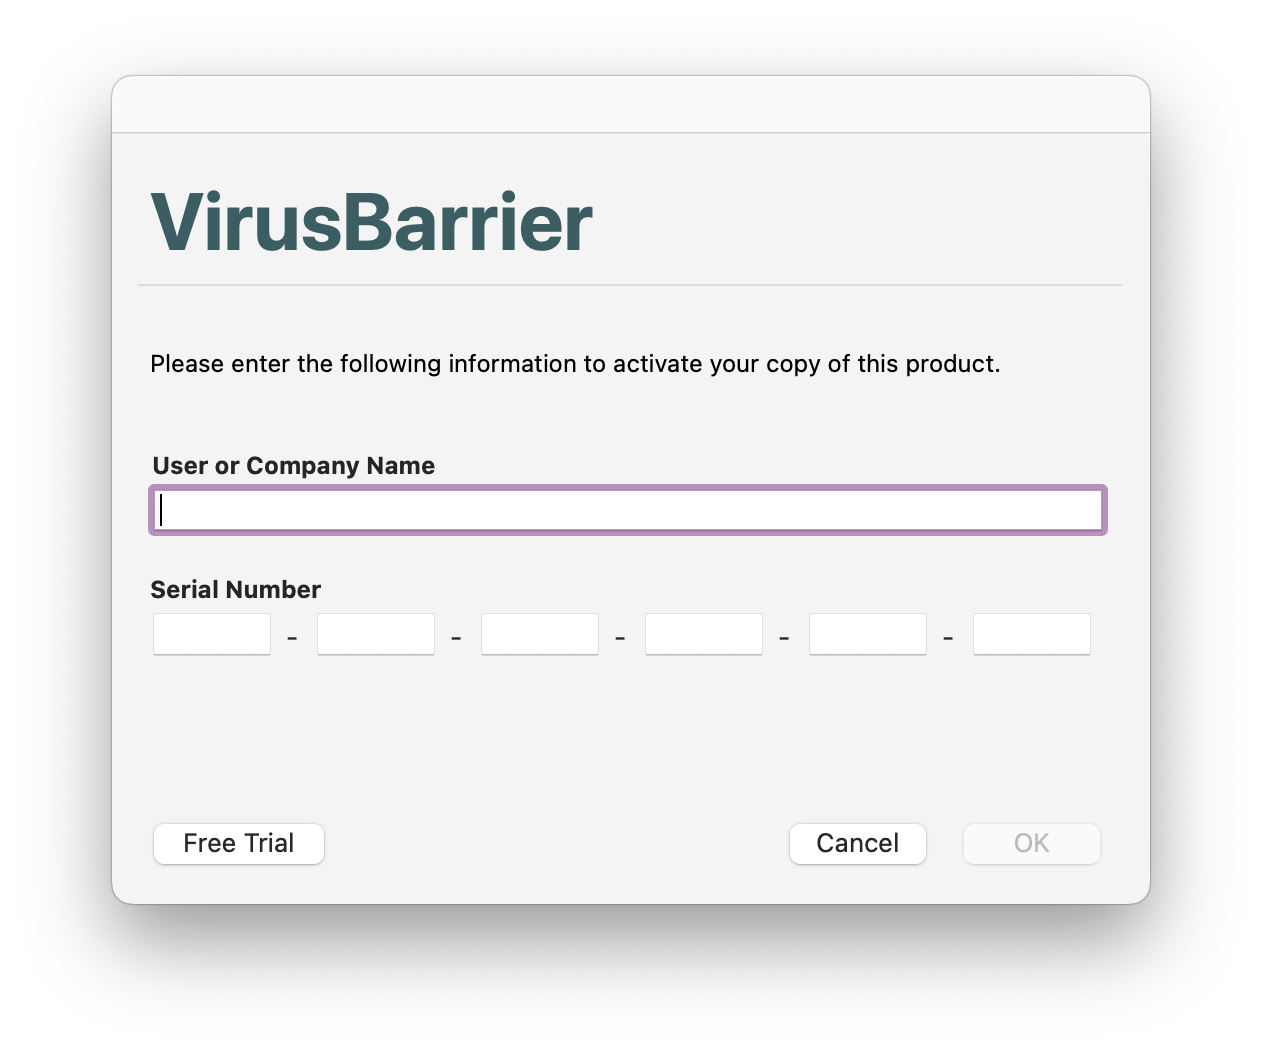 VirusBarrier_activate_window.png